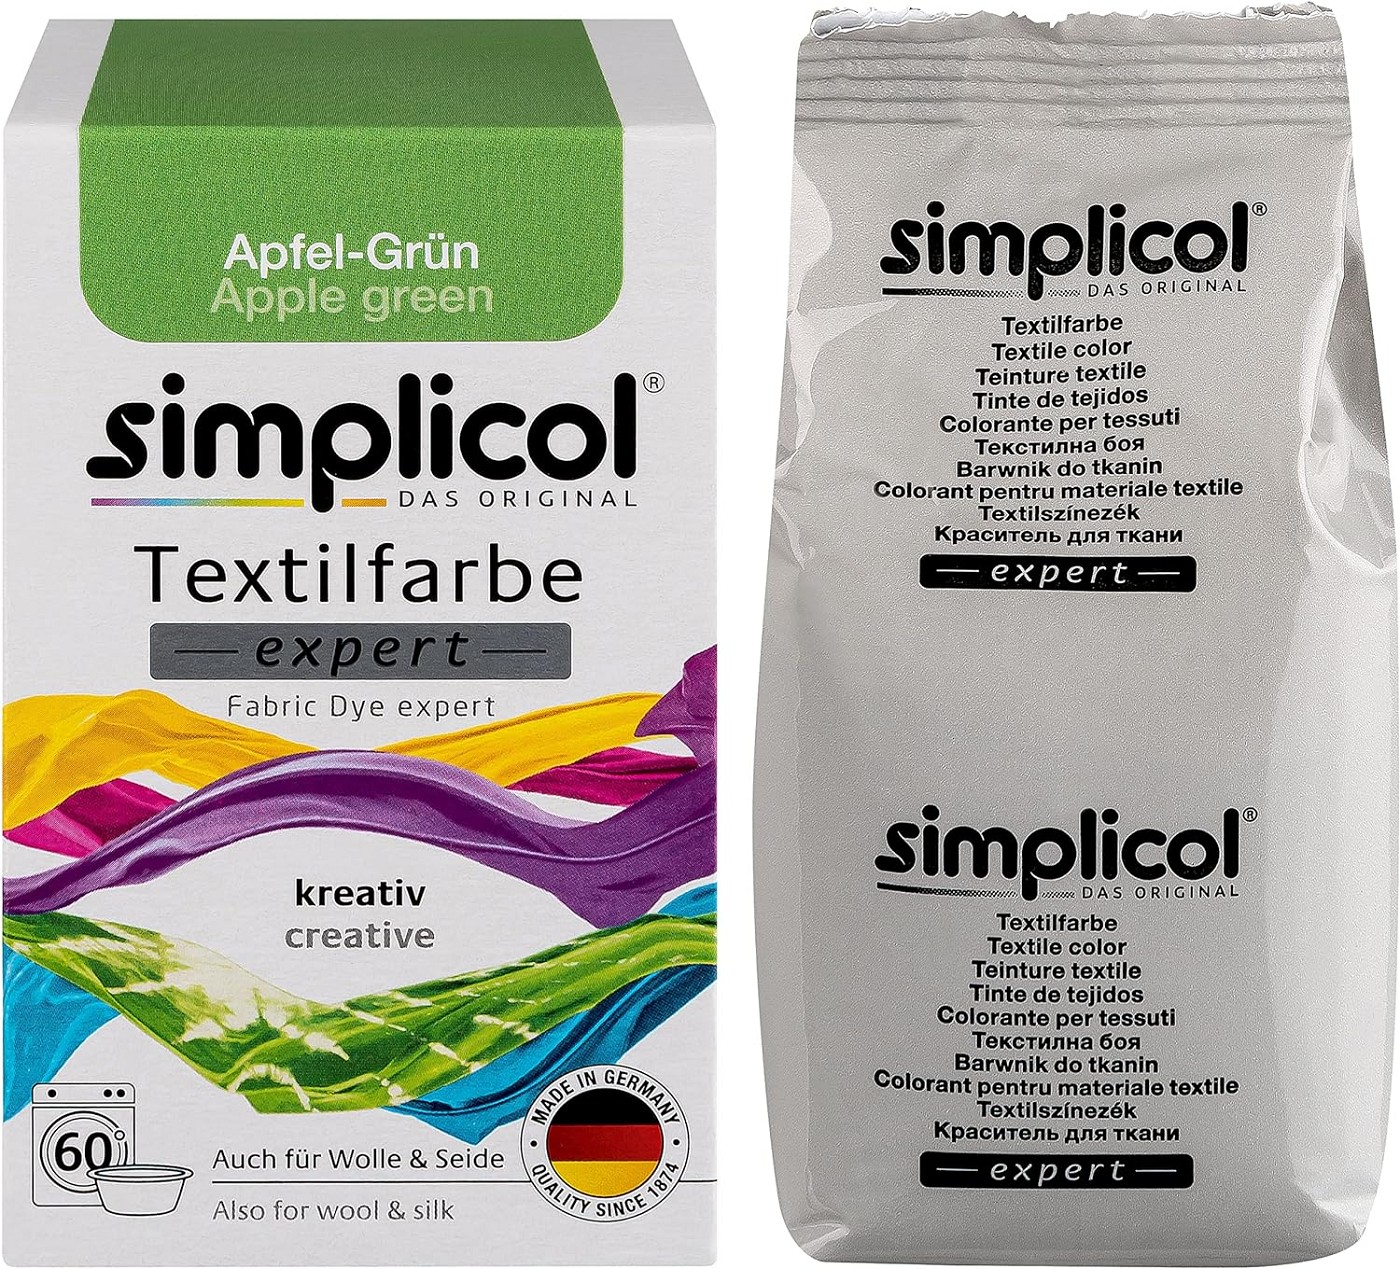 Simplicol Textilfarbe expert Apfel-Grün 300g 2er Pack